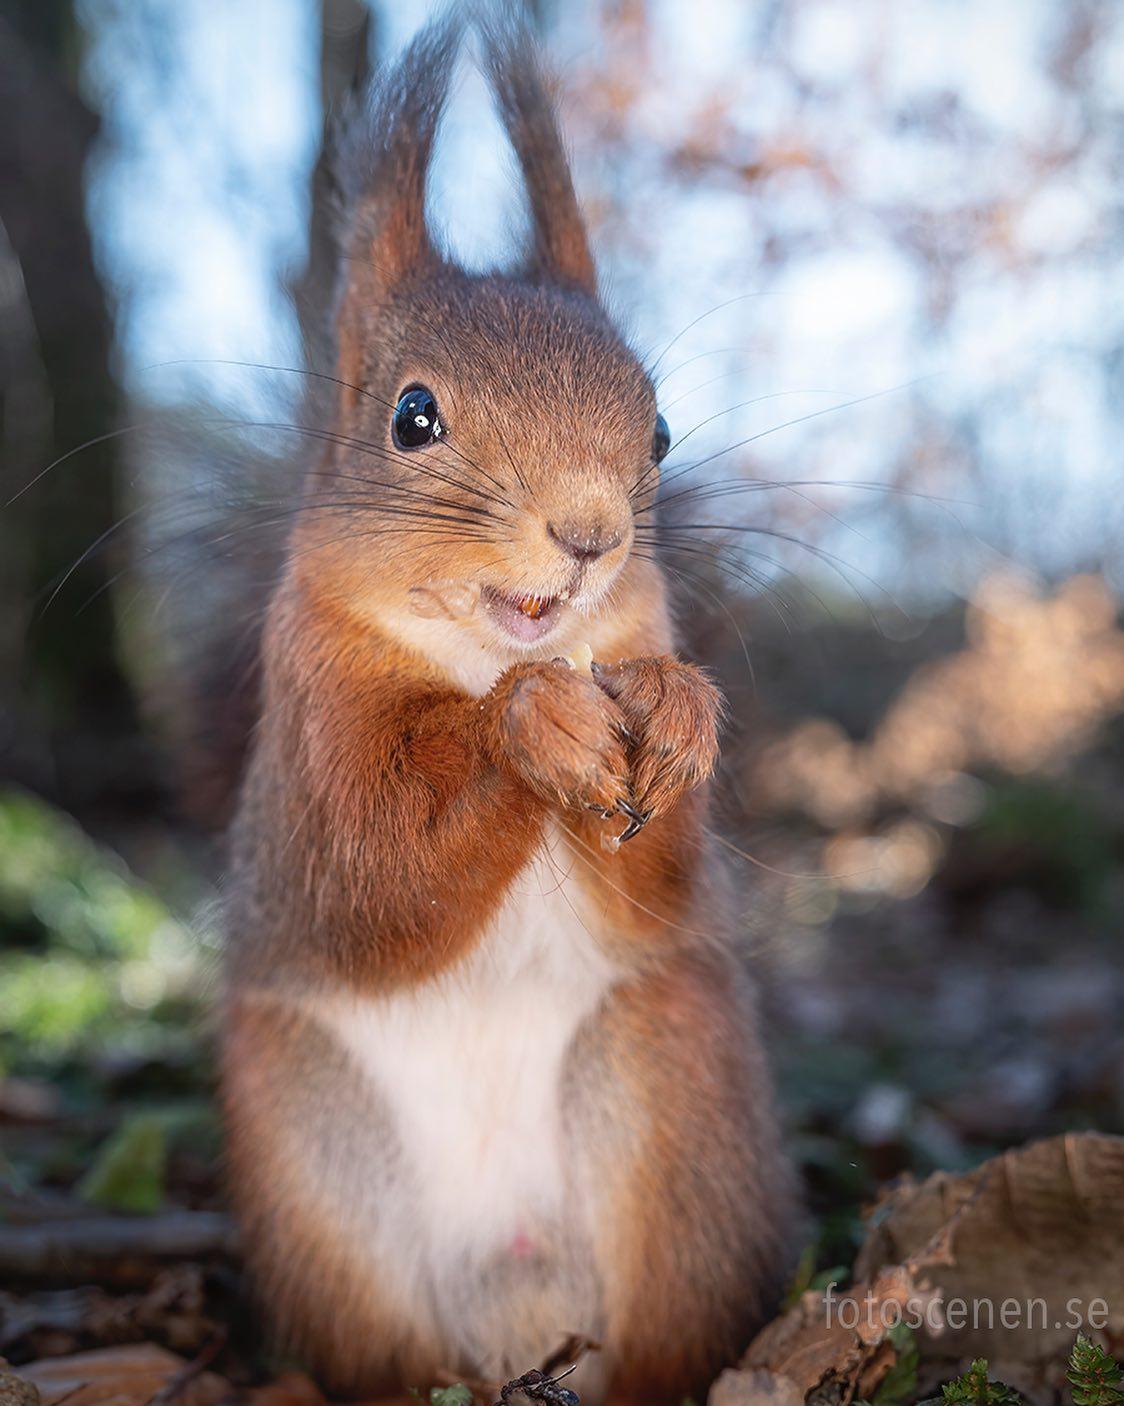 "Little charmer". (Courtesy of <a href="https://www.instagram.com/squirrels_by_fotoscenen/">Johnny Kääpä</a>)